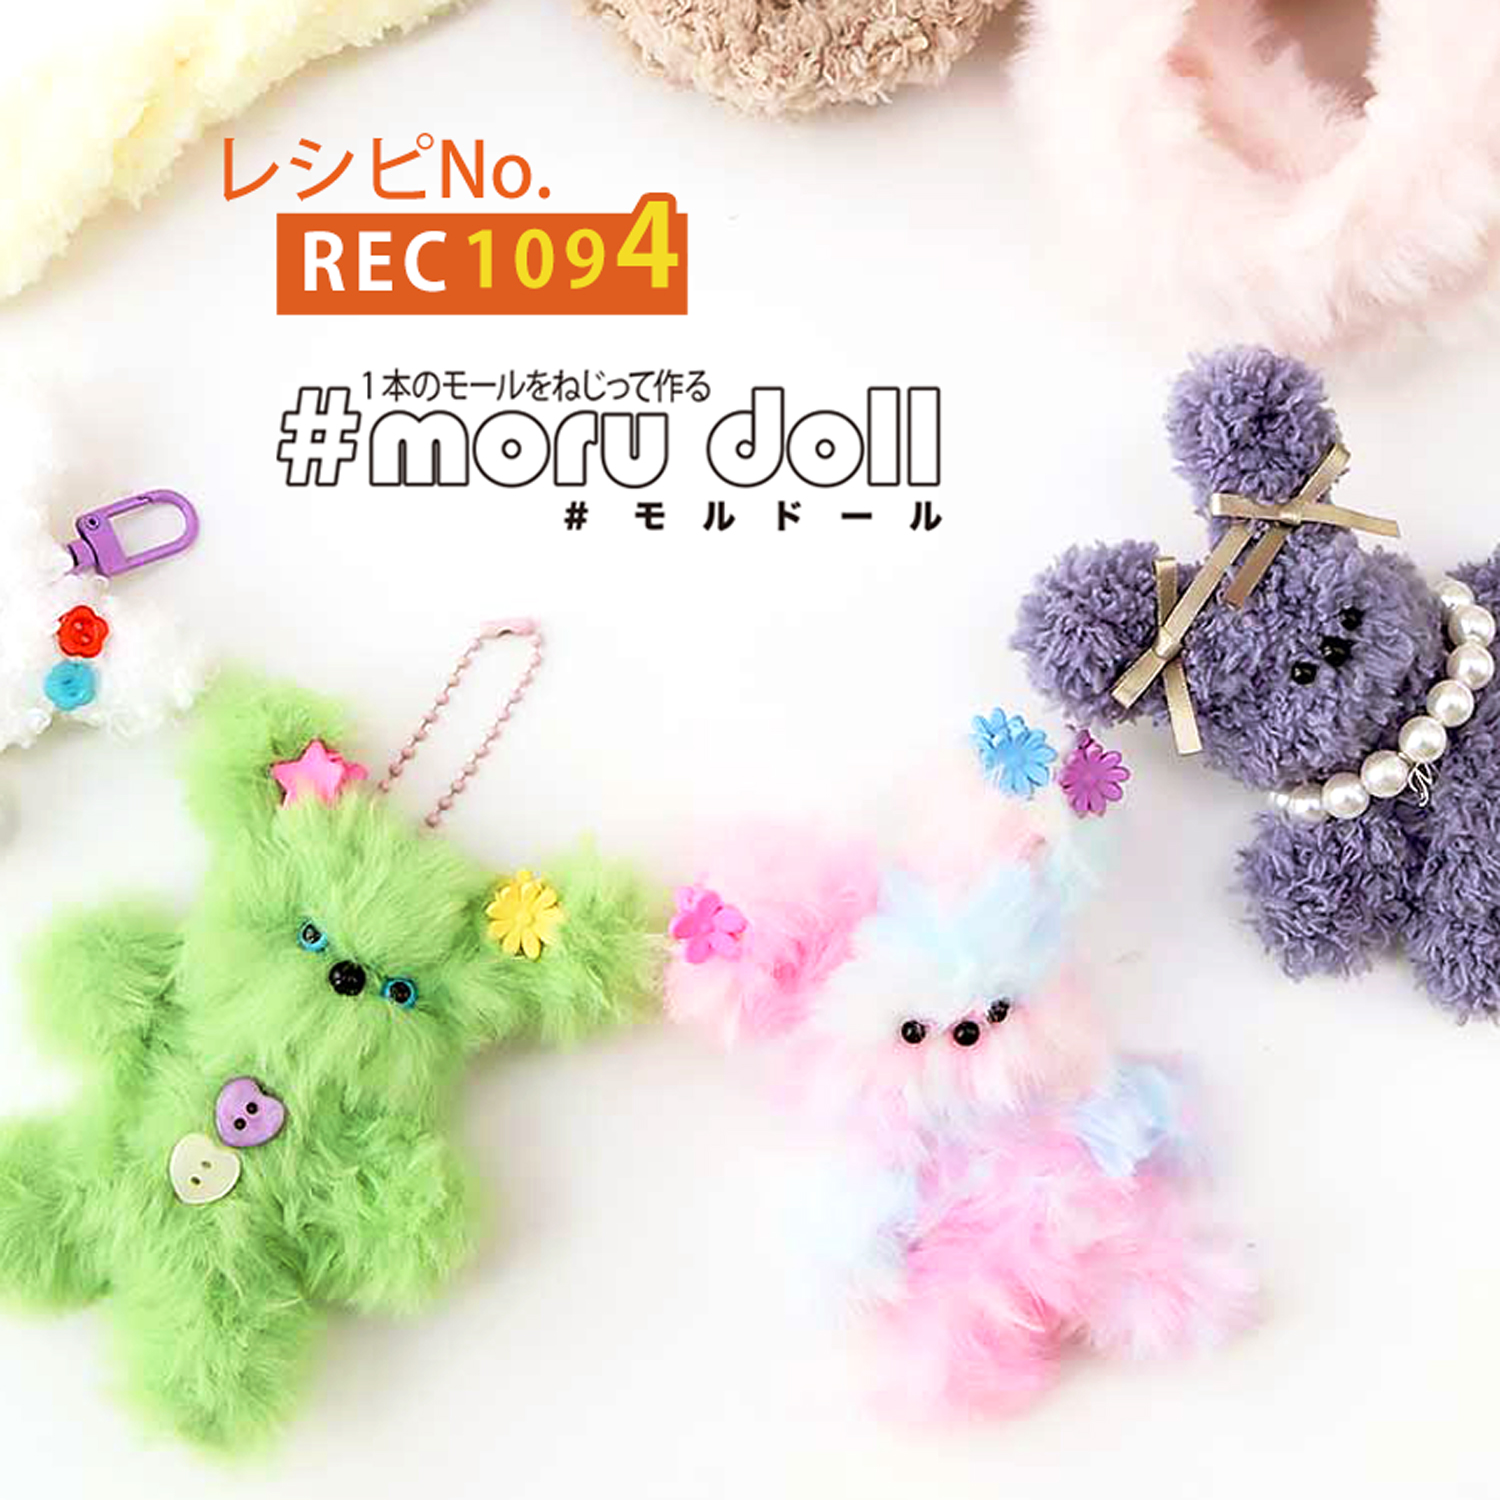 REC1094 mall doll Korean miscellaneous goods Recipe (pcs)